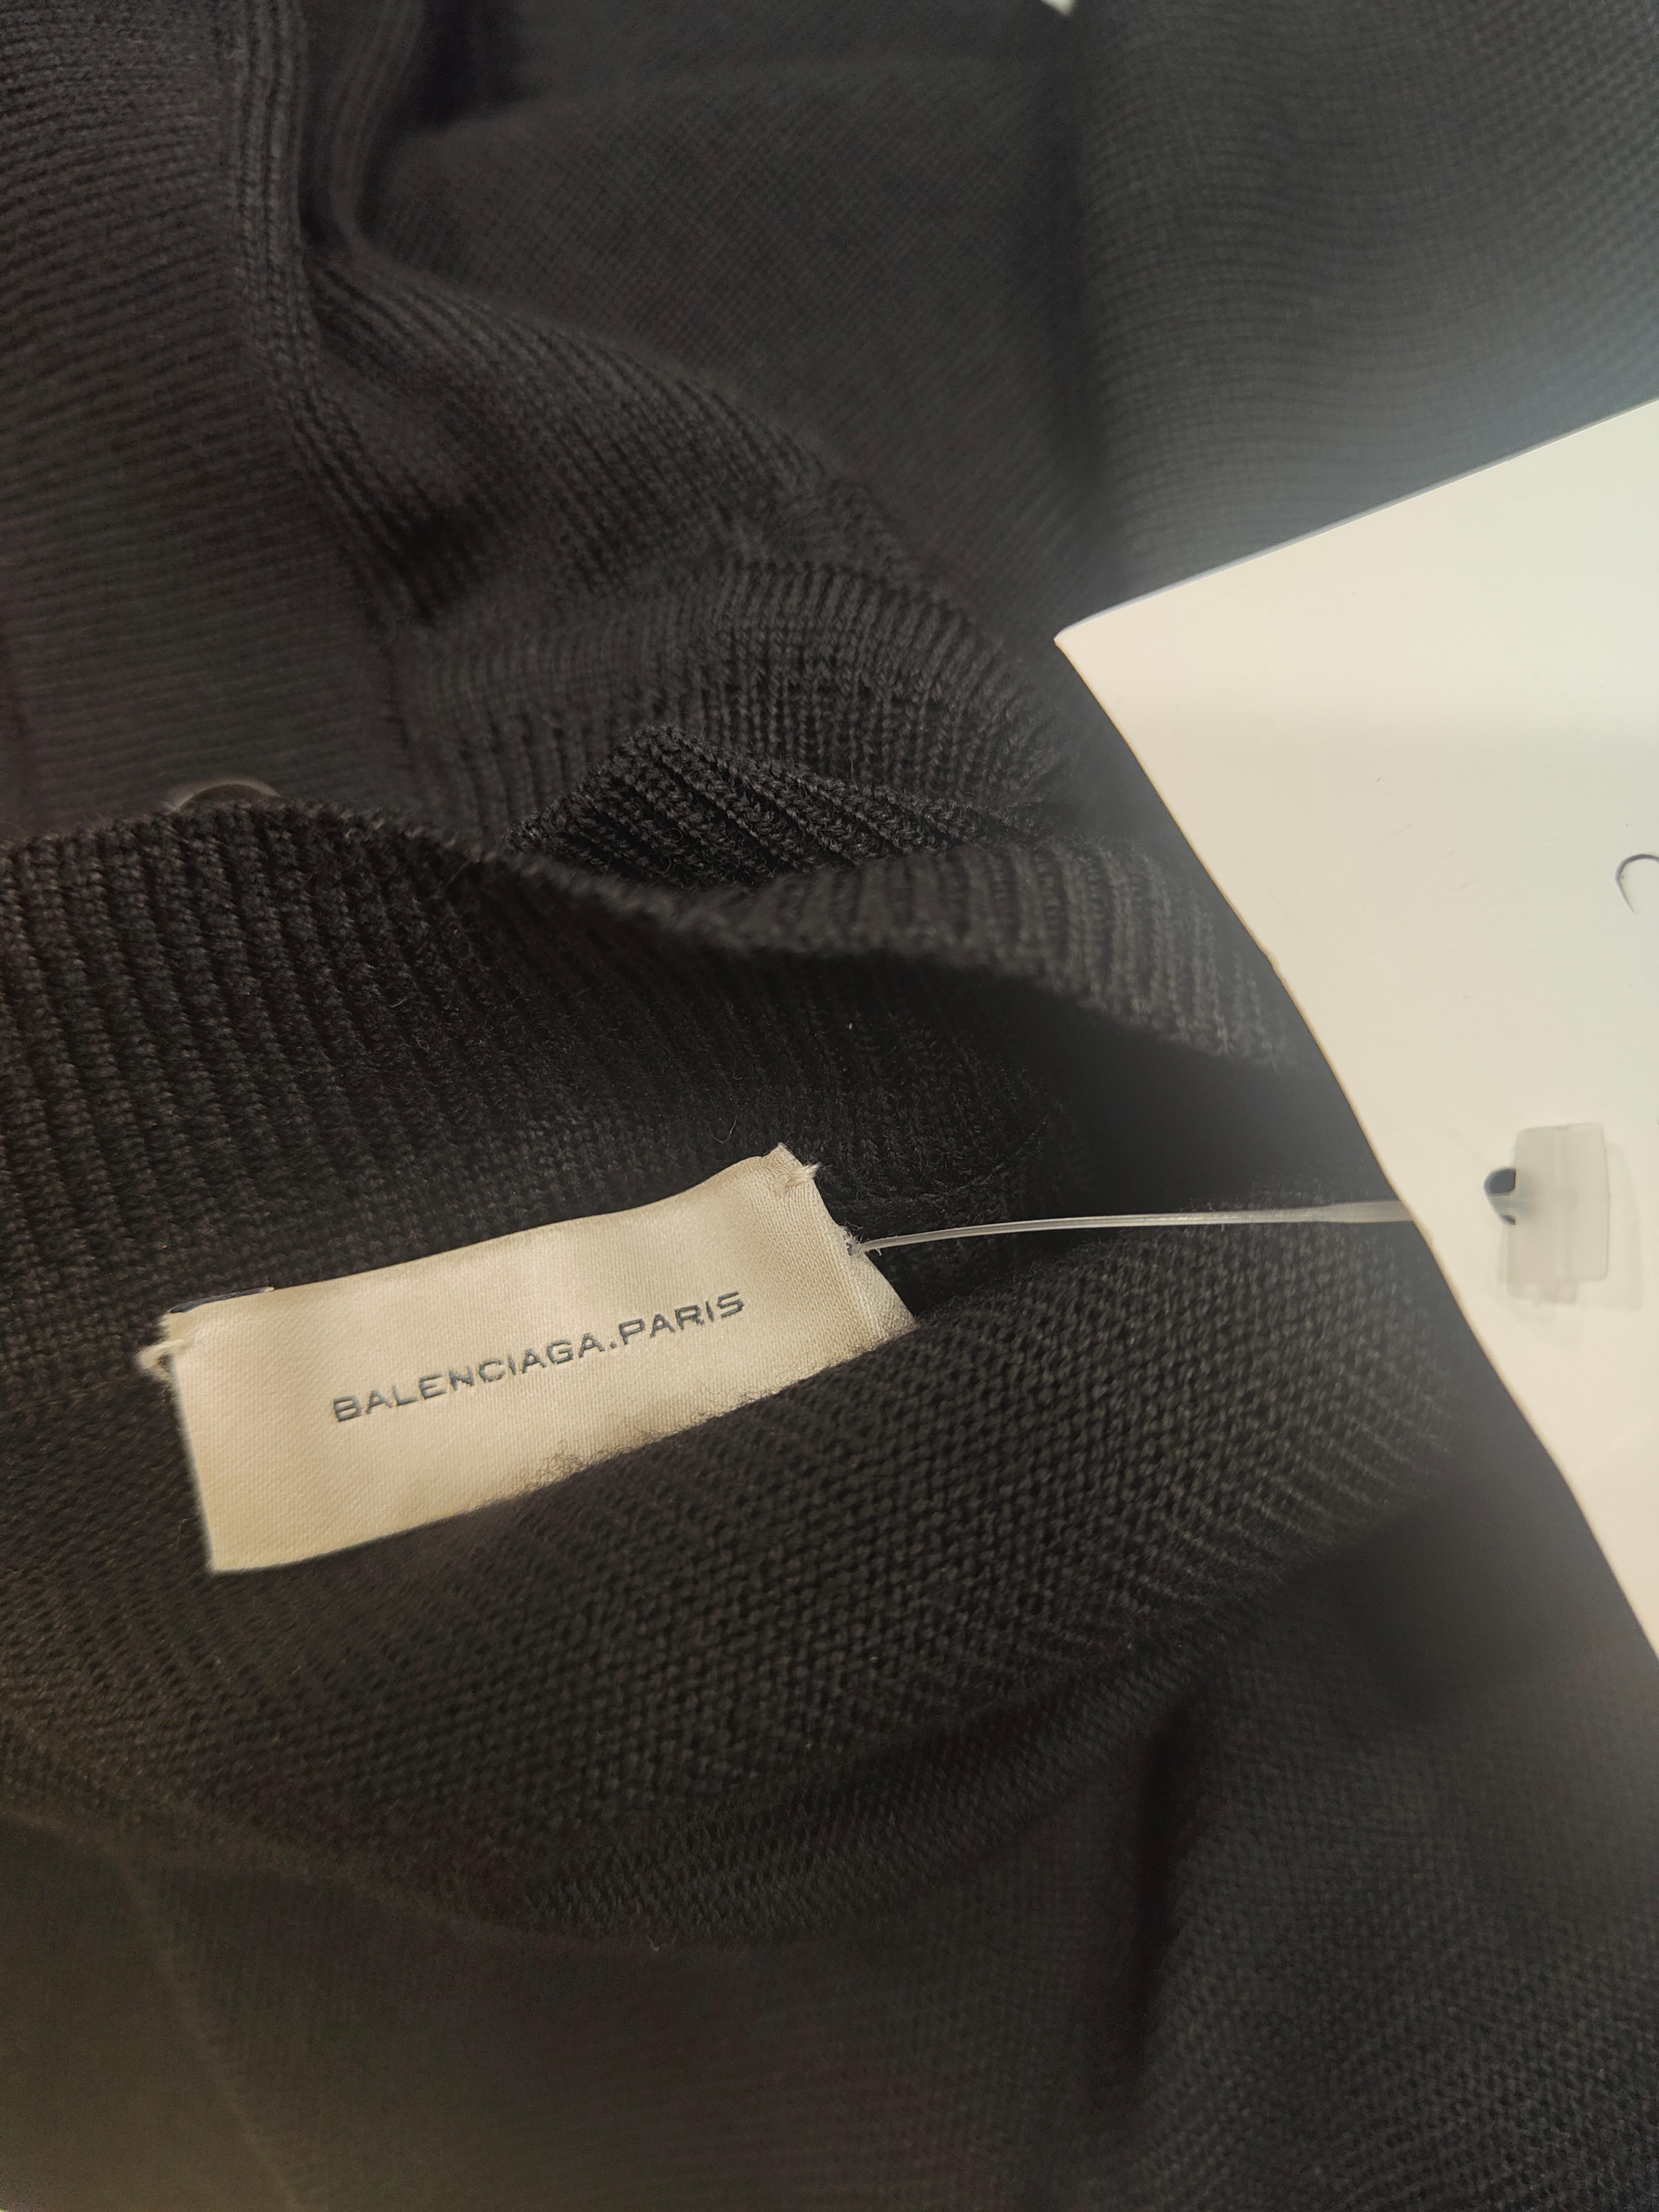 Balenciaga black wool cardigan size M